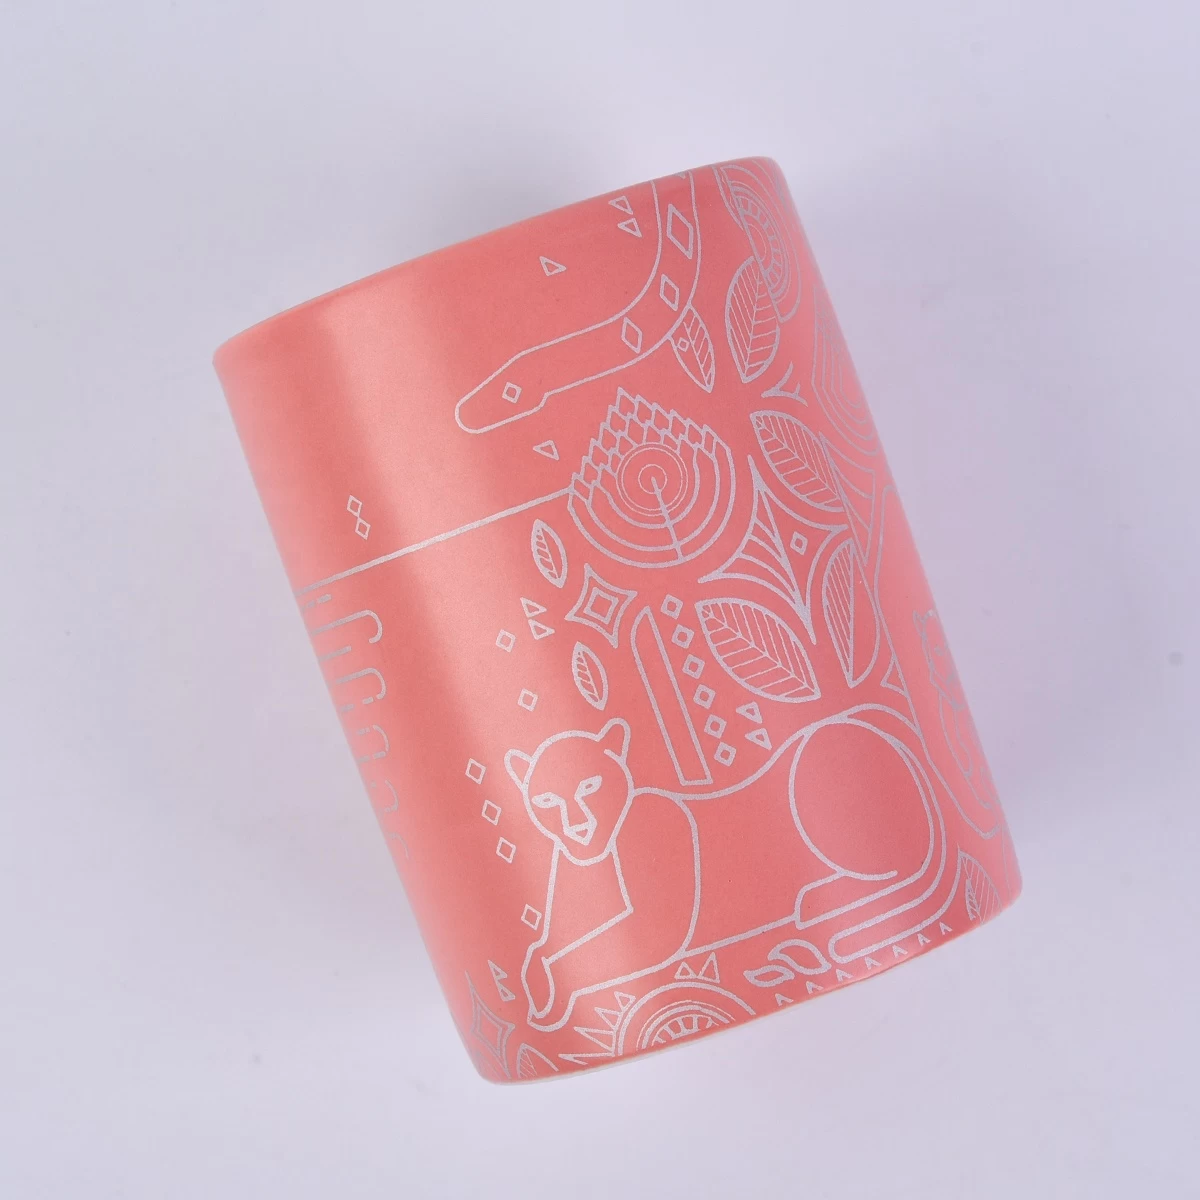 10oz Wholesales iridescent luxury candle ceramic jar